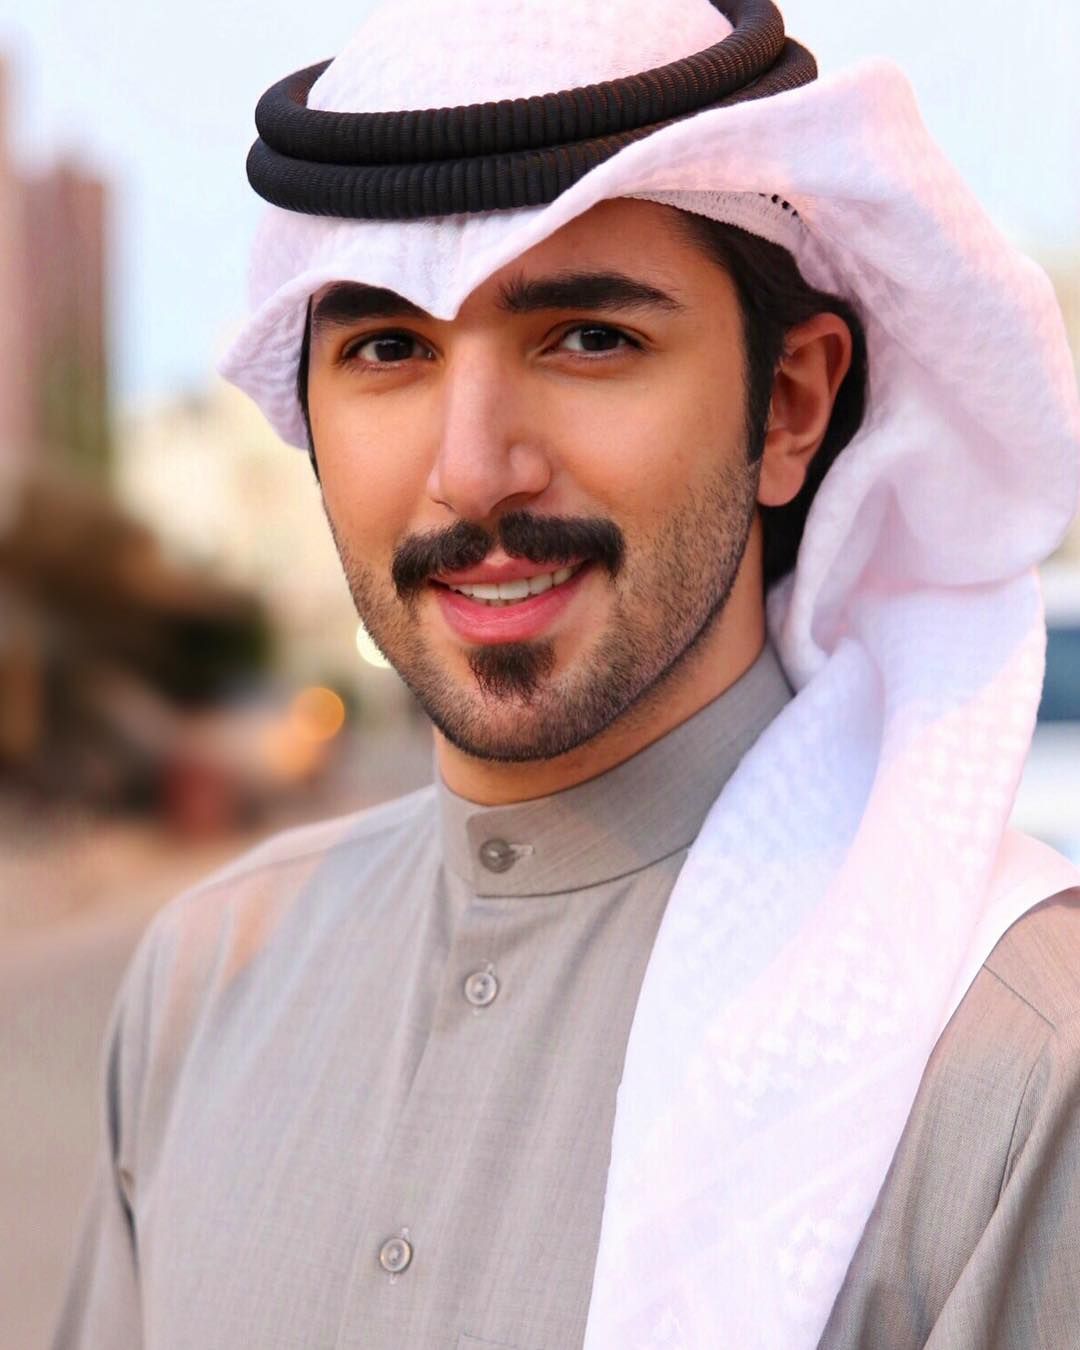 Kuwaiti guys Kuwaiti men Kuwait boys Arab men handsome Arabian guys شباب الكويت كويتين. Arab men fashion, Handsome arab men, Arab men